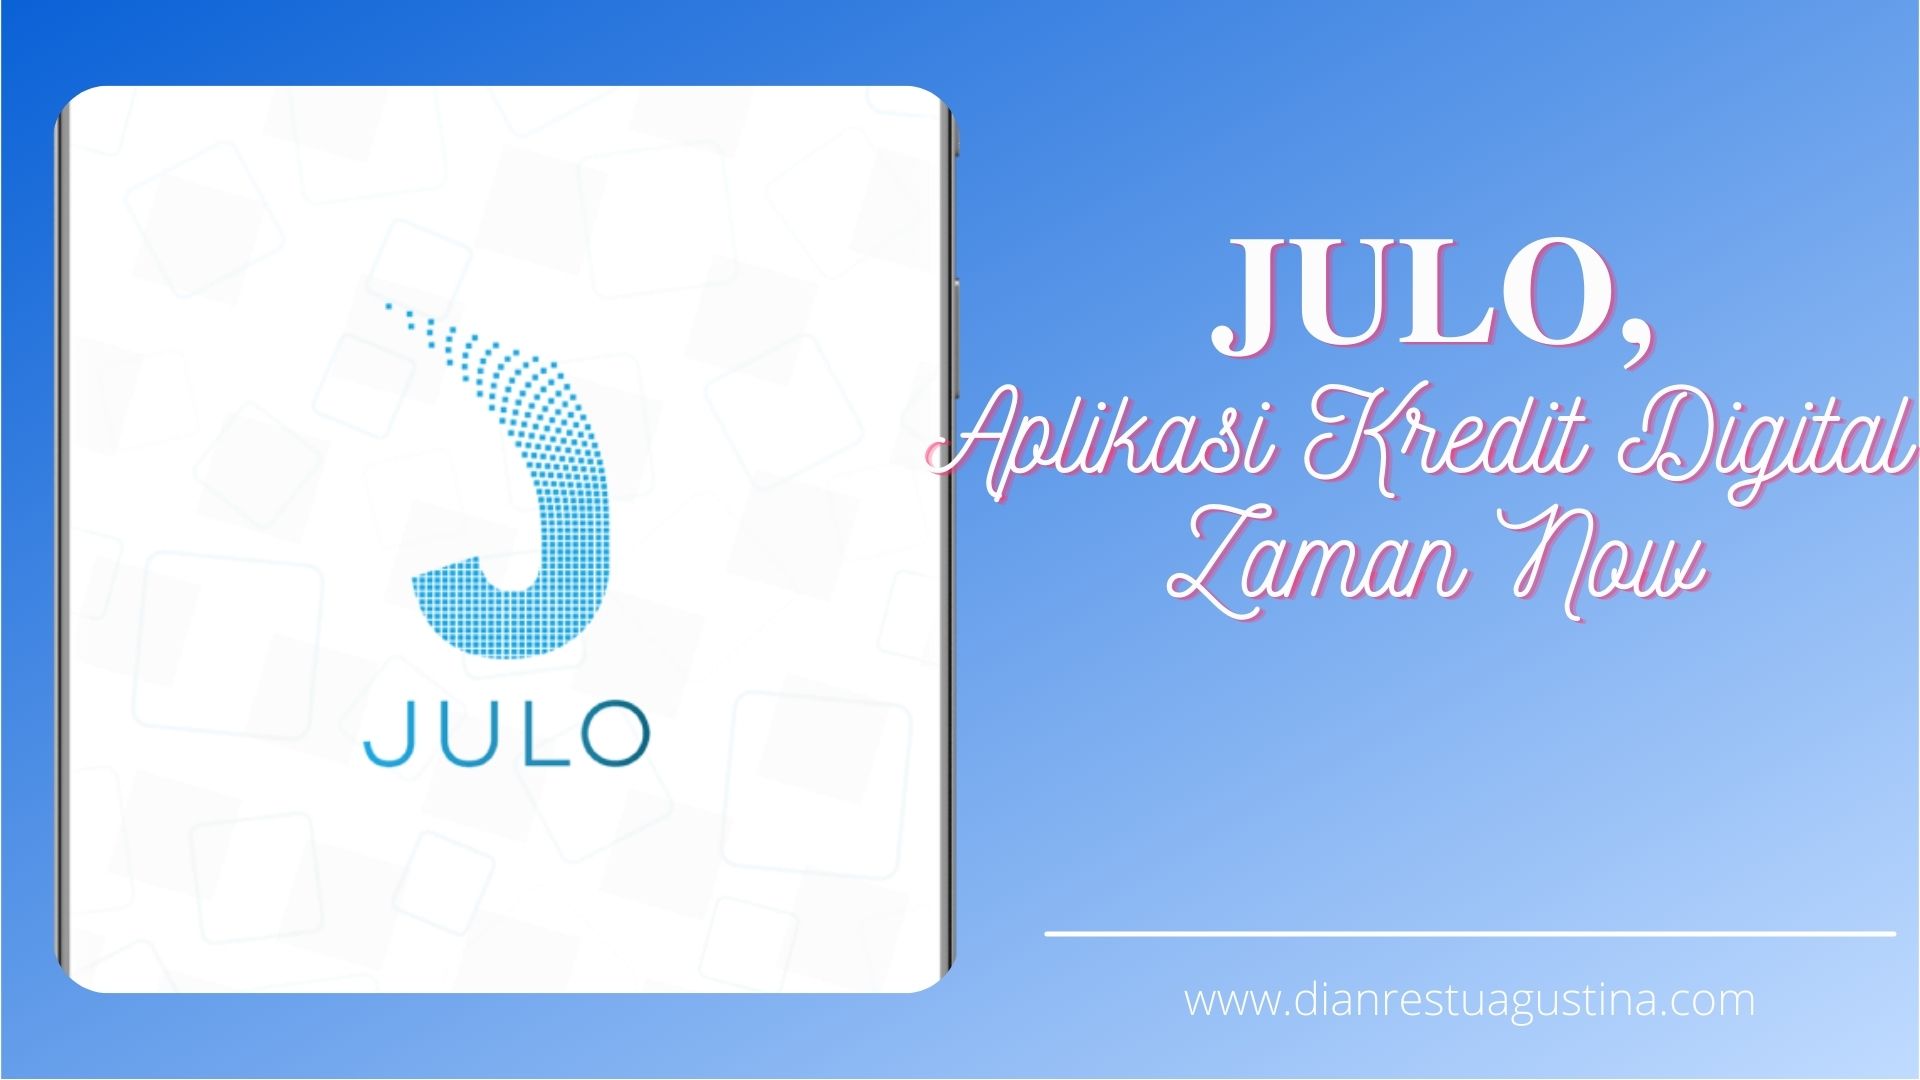 JULO, Aplikasi Kredit Digital Zaman Now